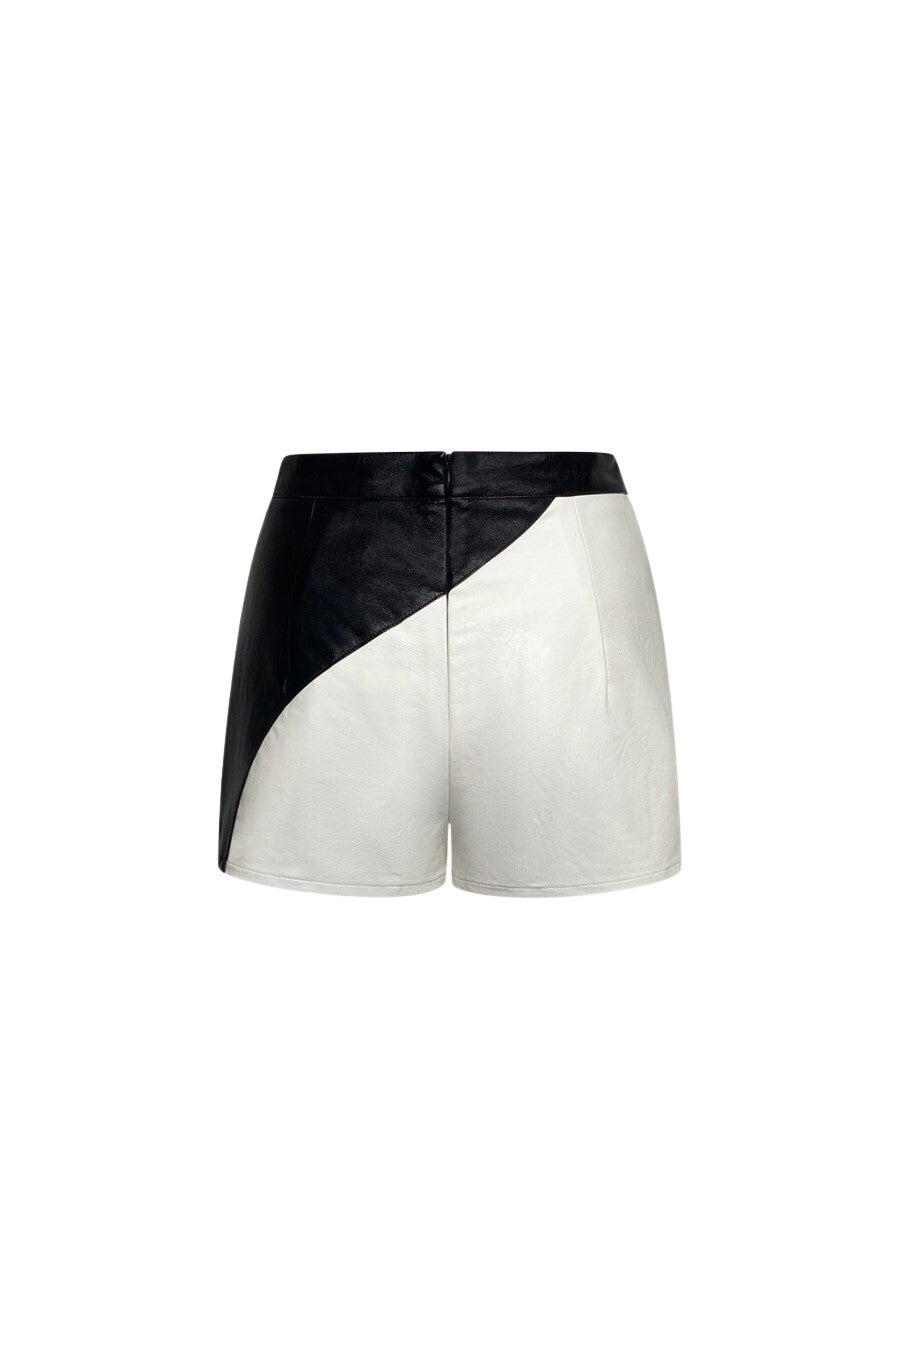 "YIN YANG" Black & White Vegan Leather High-Waisted Shorts